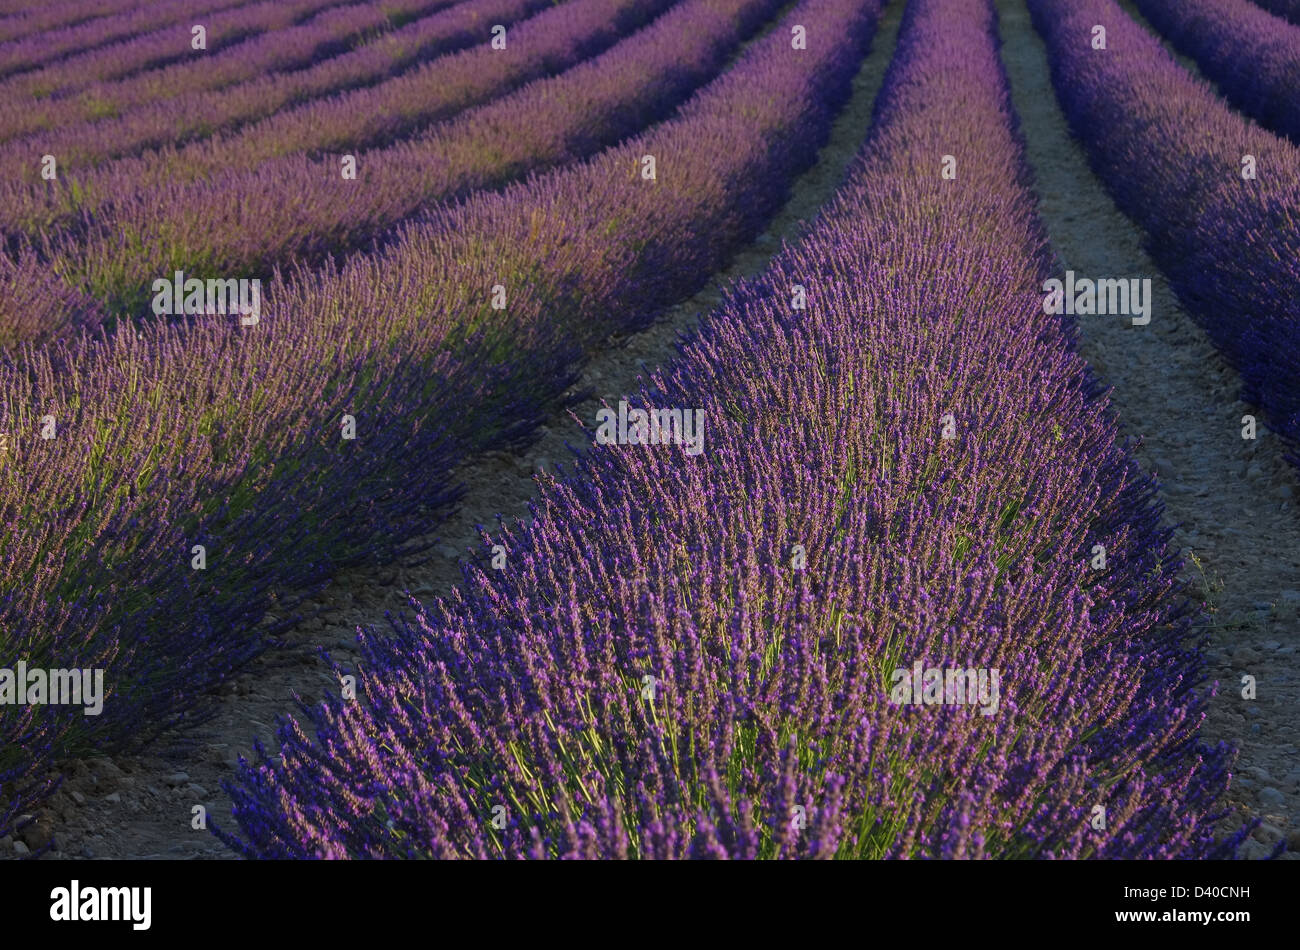 Lavendelfeld - lavender field 67 Stock Photo